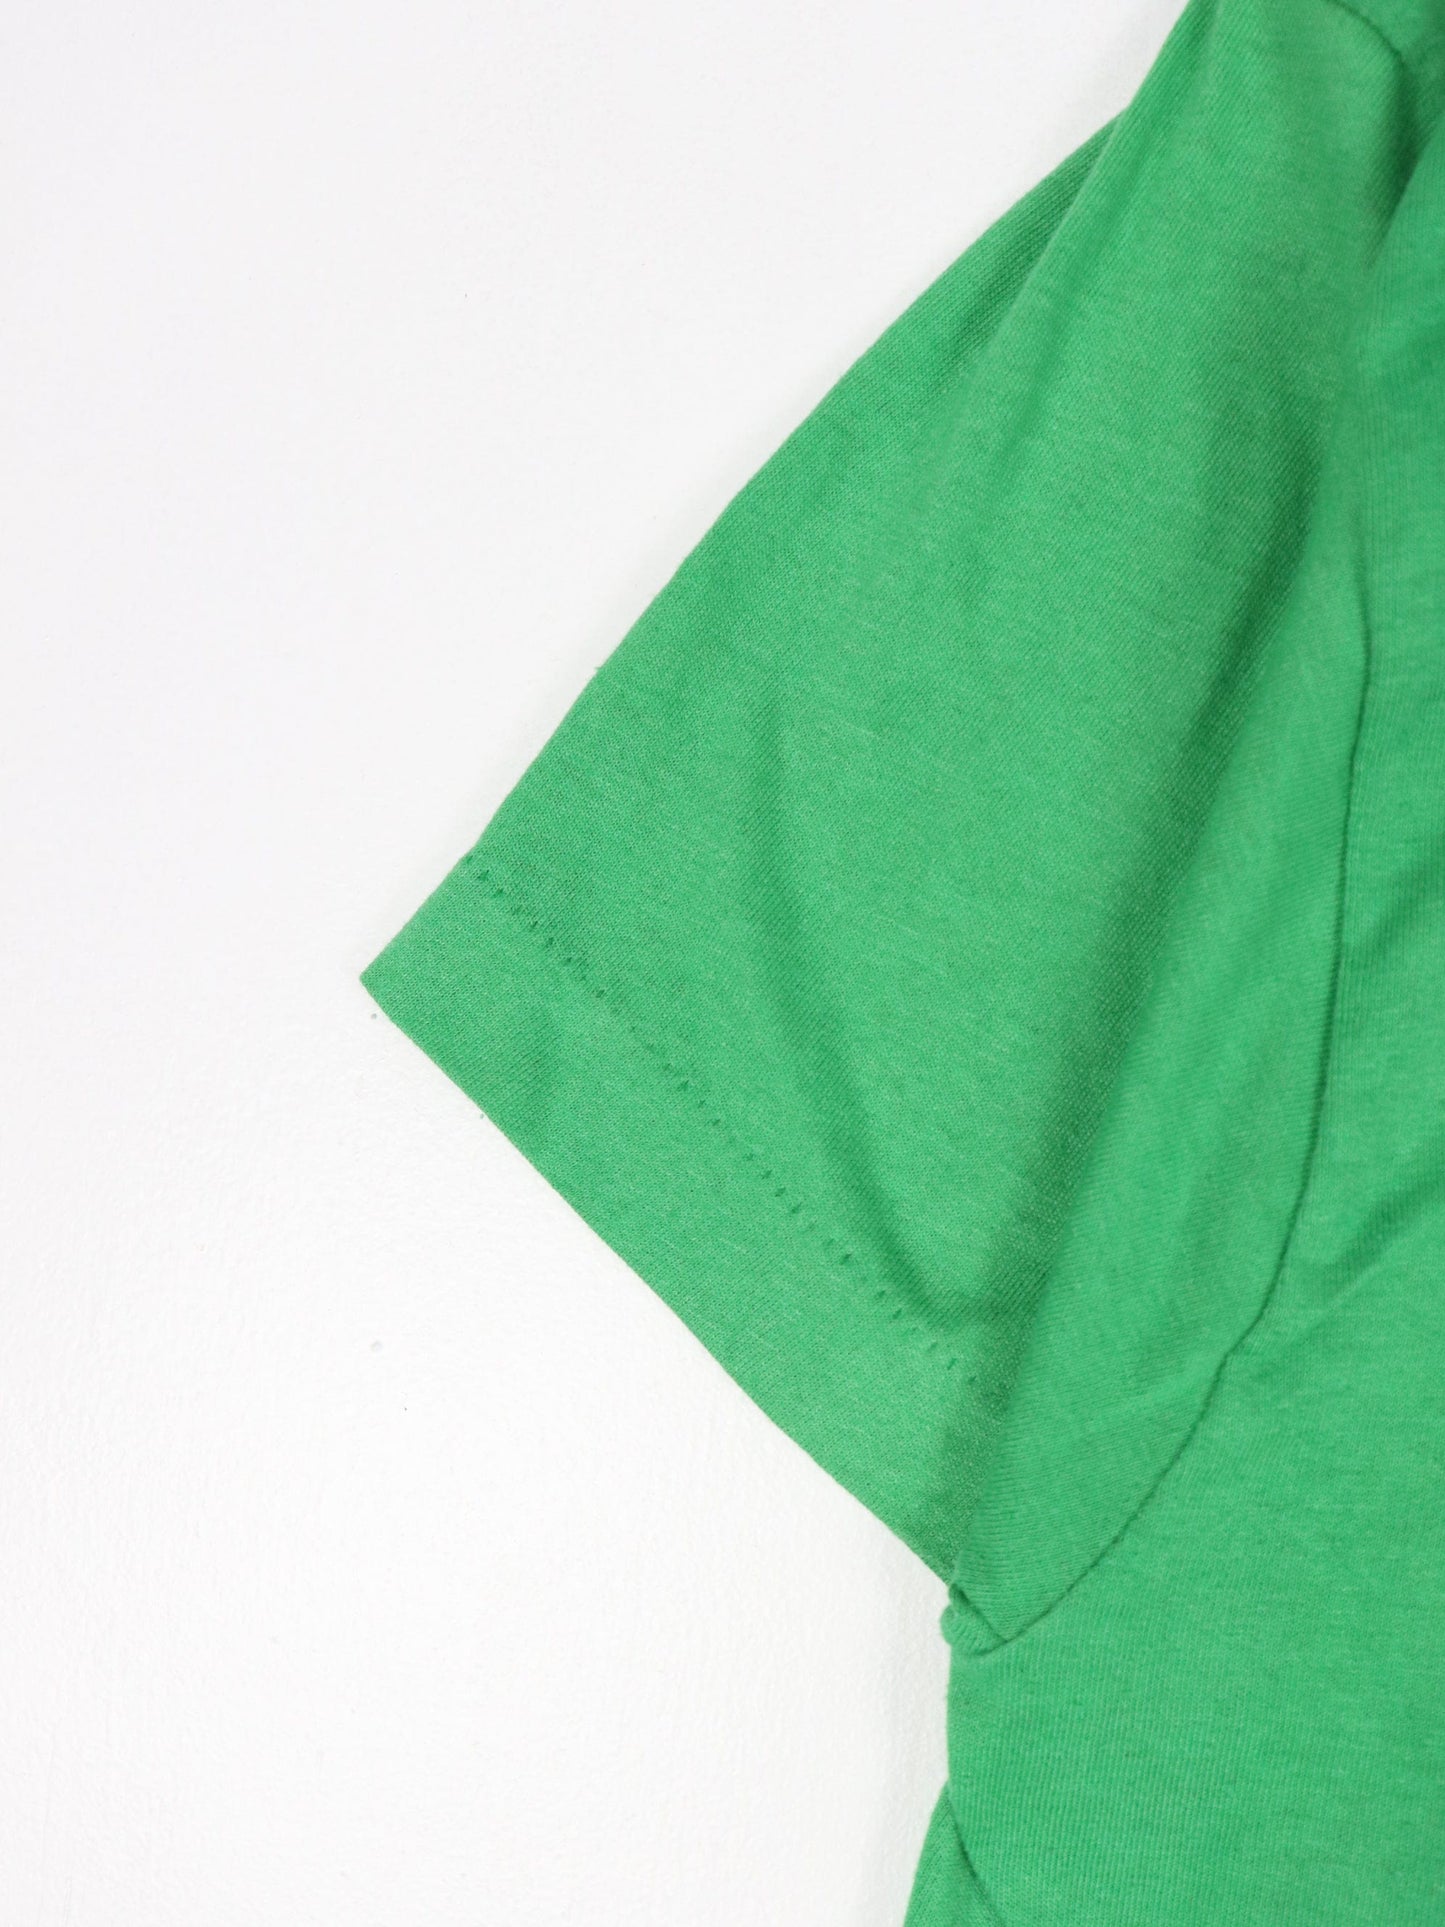 Other T-Shirts & Tank Tops Vintage Ireland T Shirt Fits Mens Medium Green Clover 80s